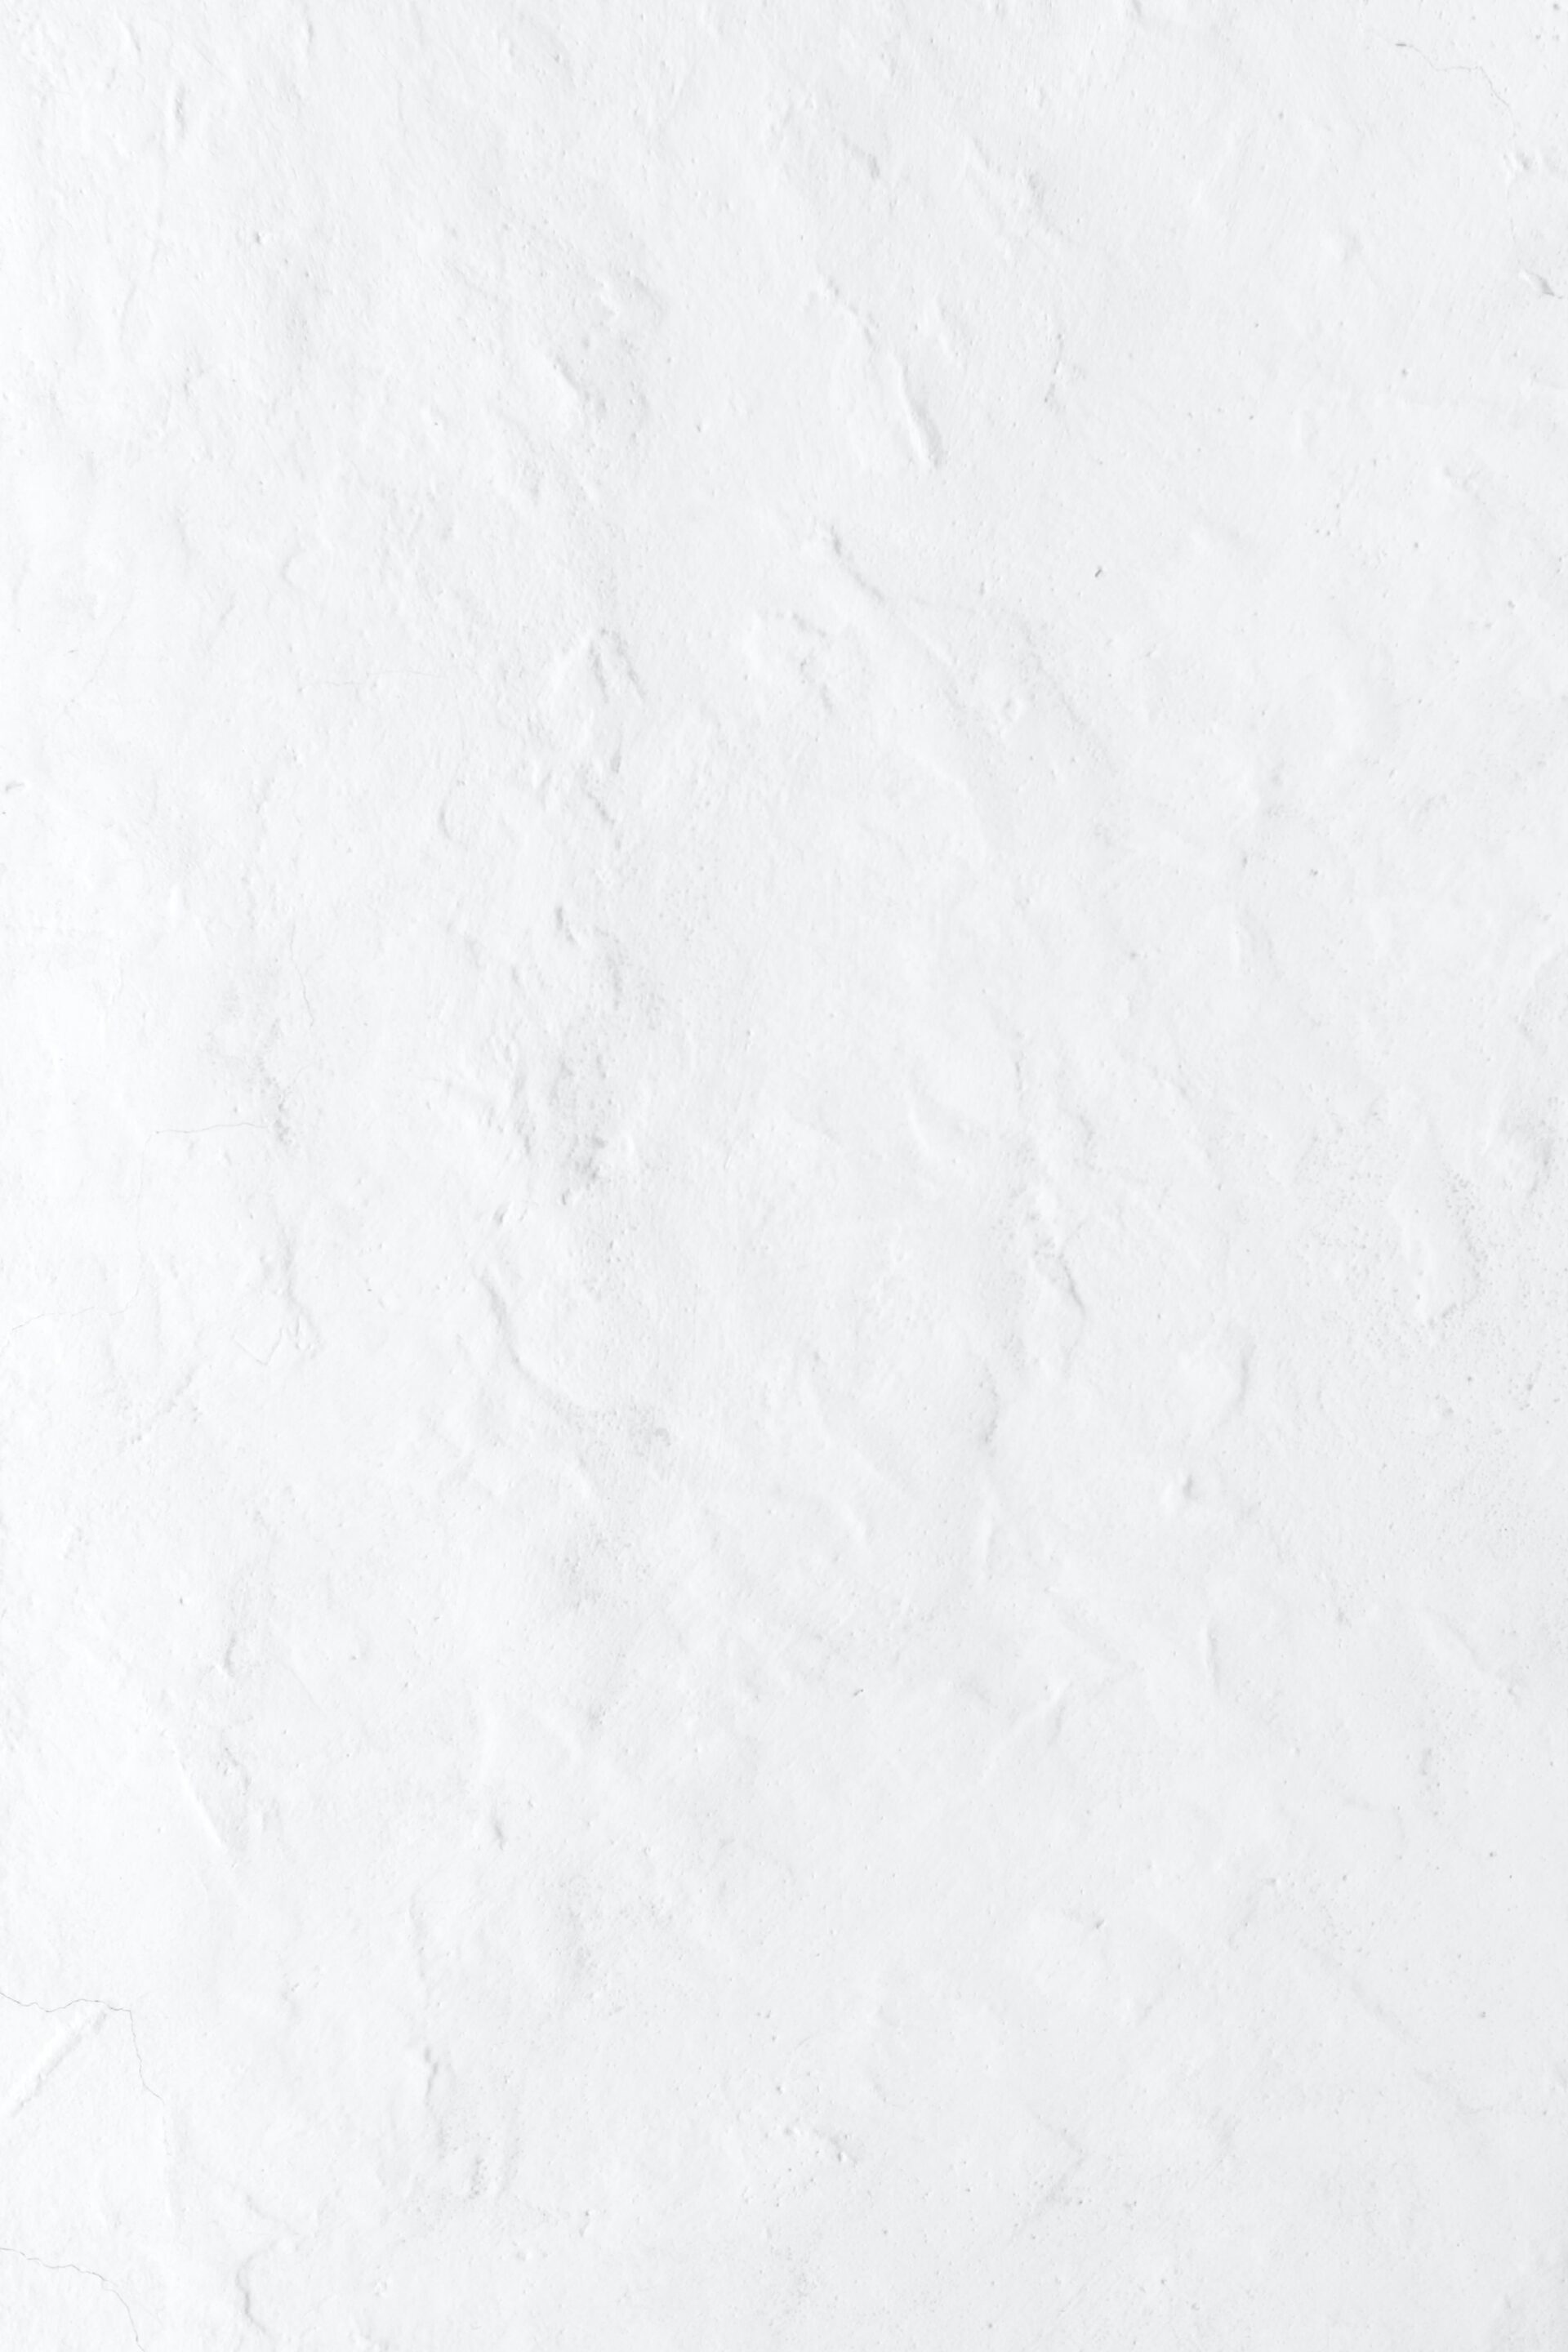 texture blanche mur